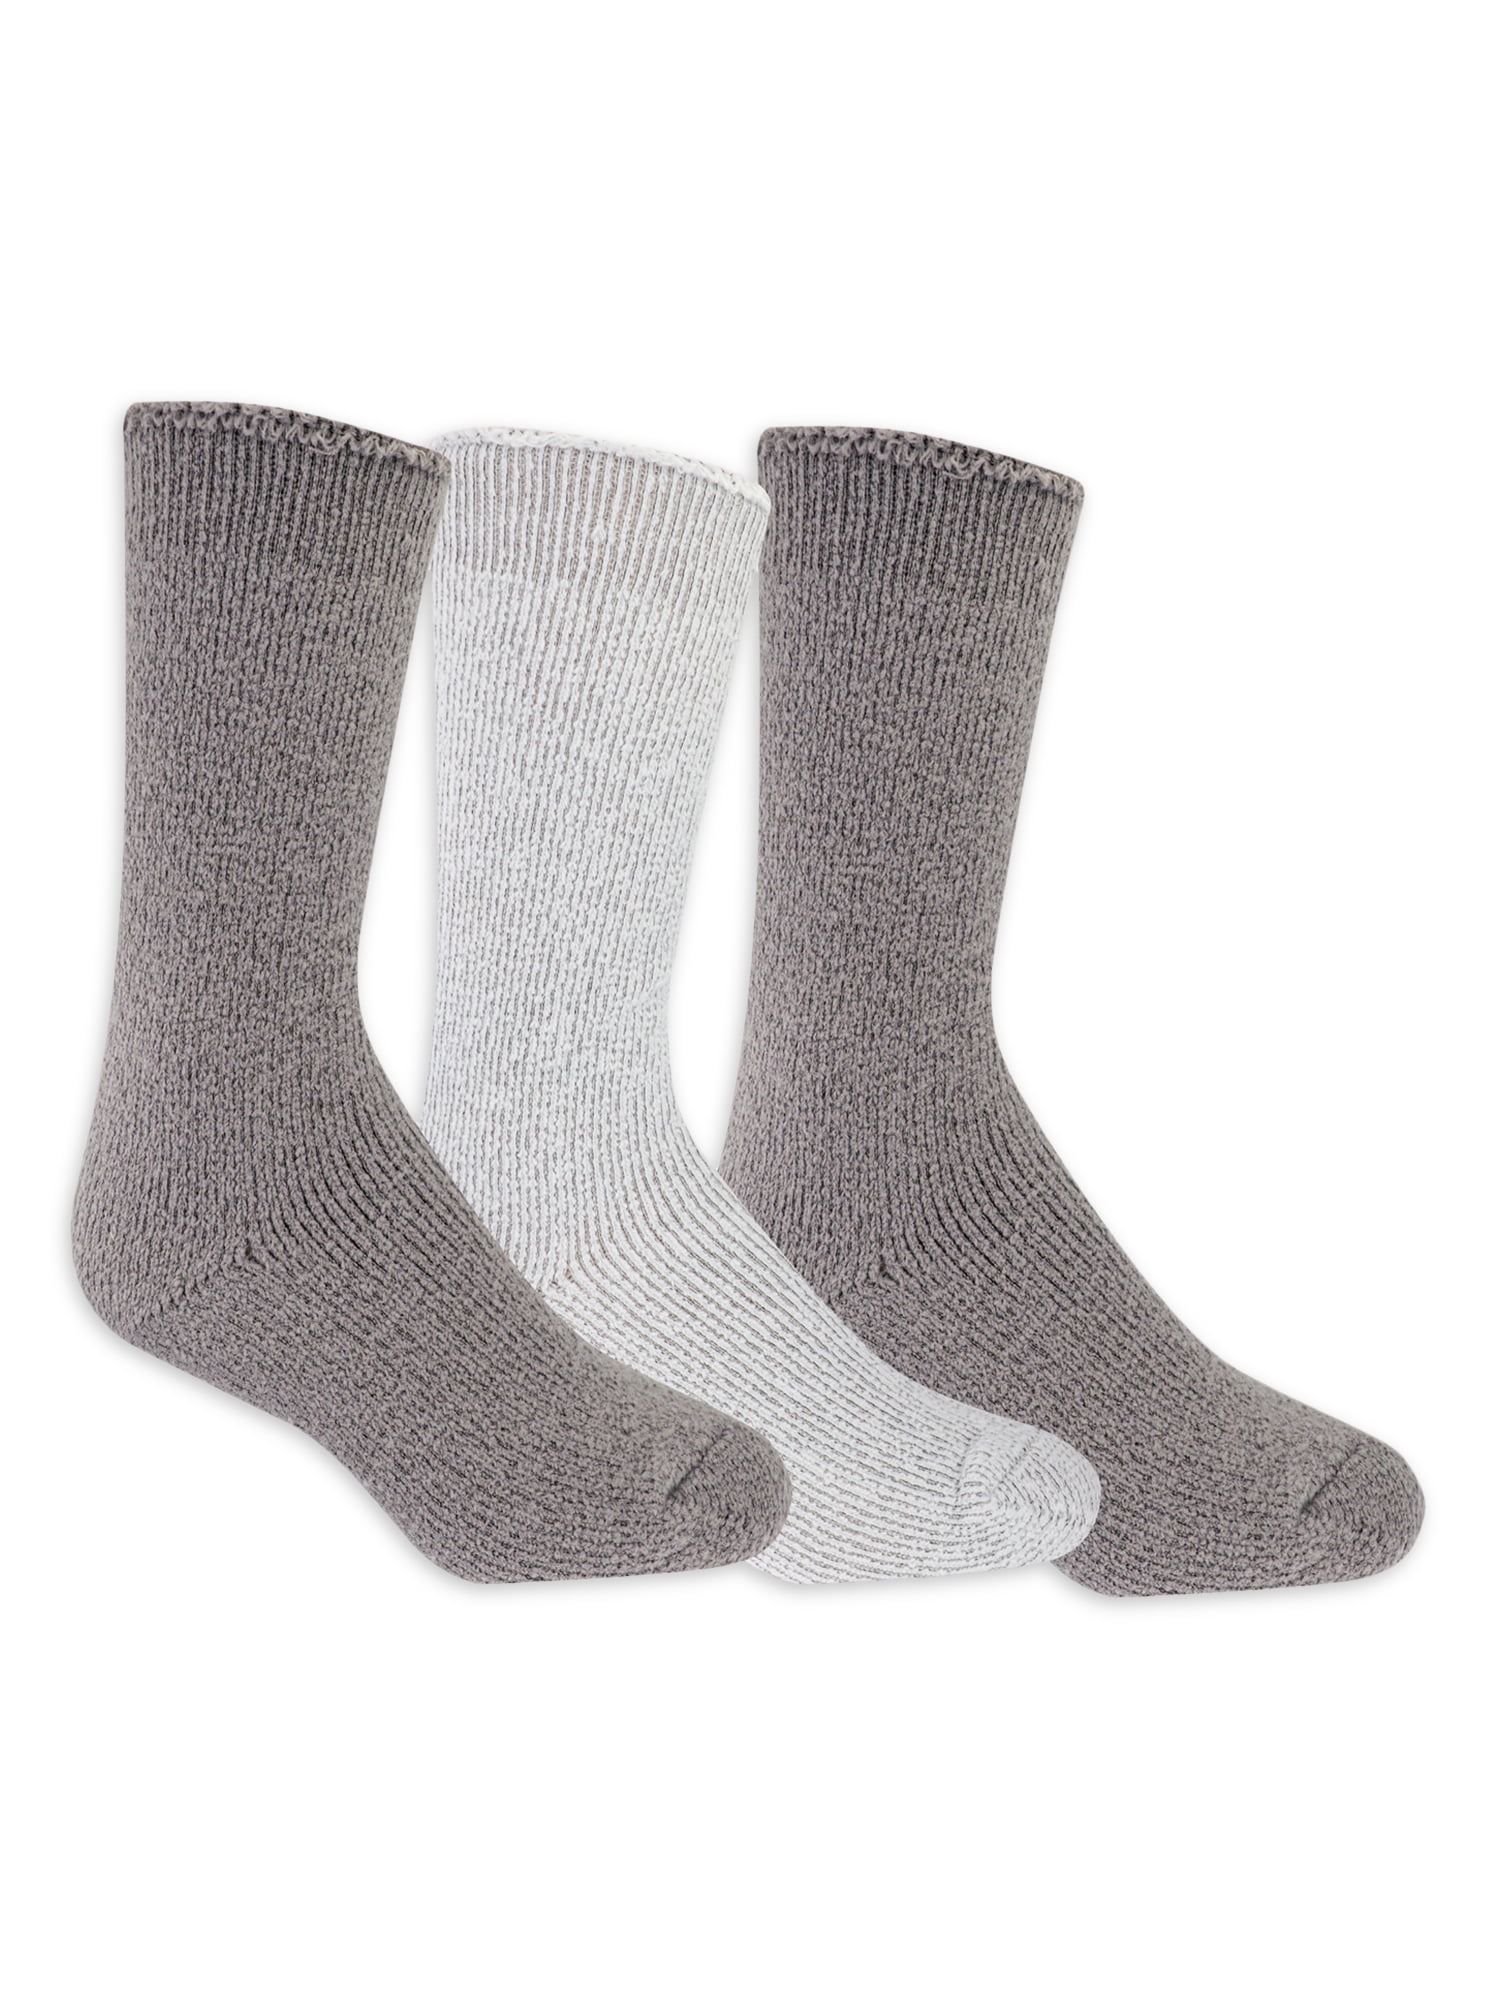 Dr. Scholl's Men's Ultimate Cozy Socks 3 Pair Pack